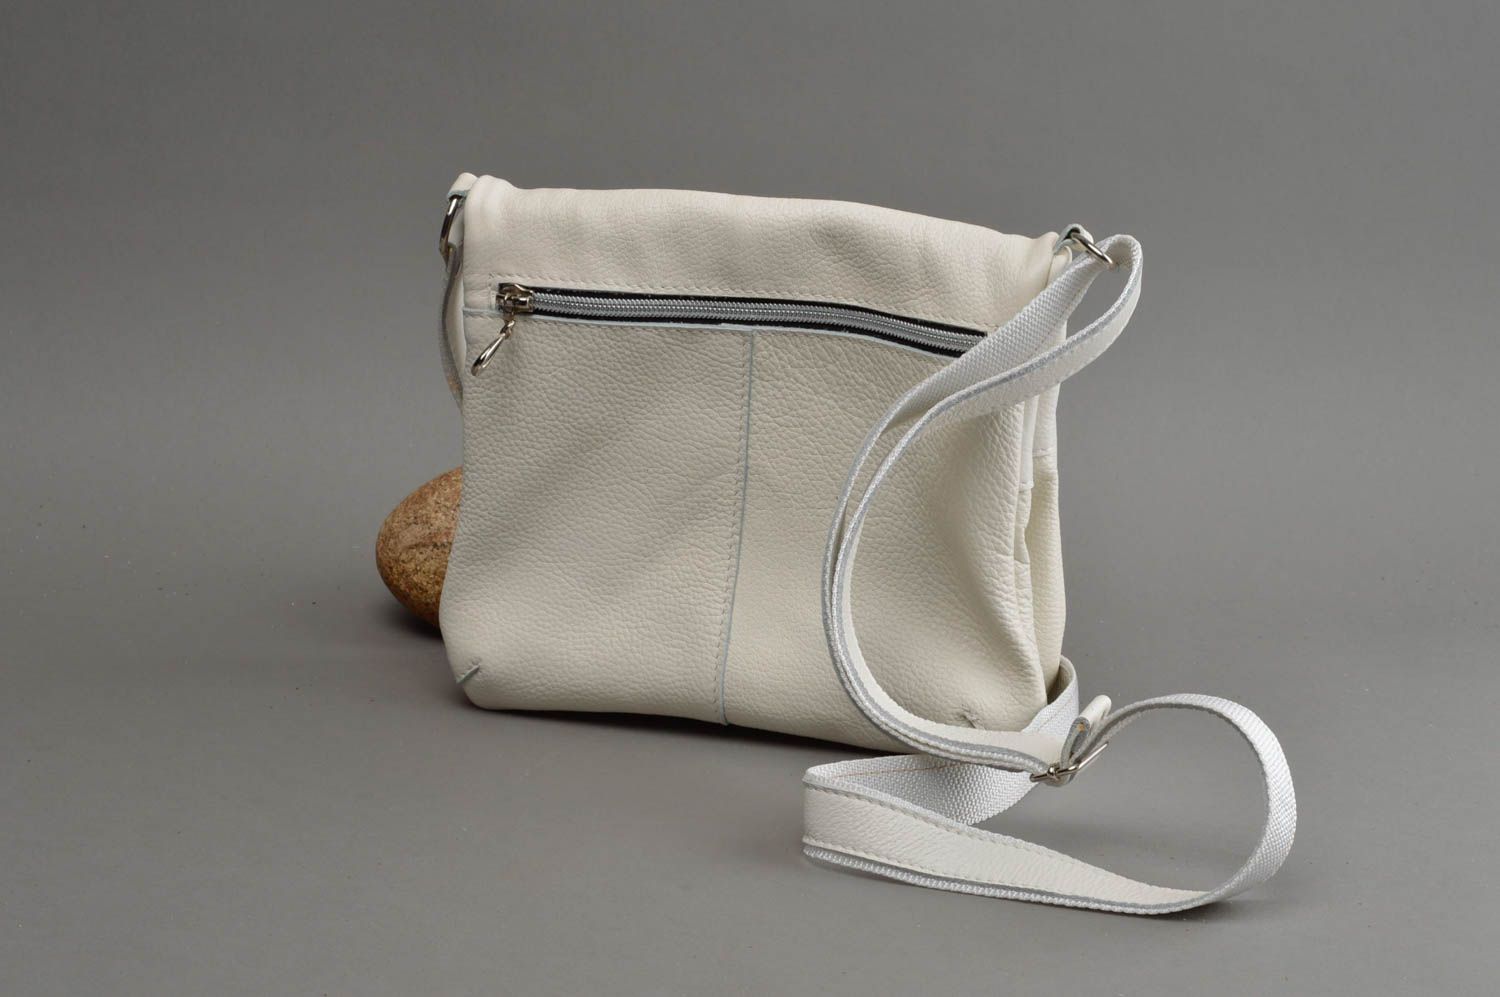 Convenient handmade leather bag stylish shoulder bag leather handbag gift ideas photo 1